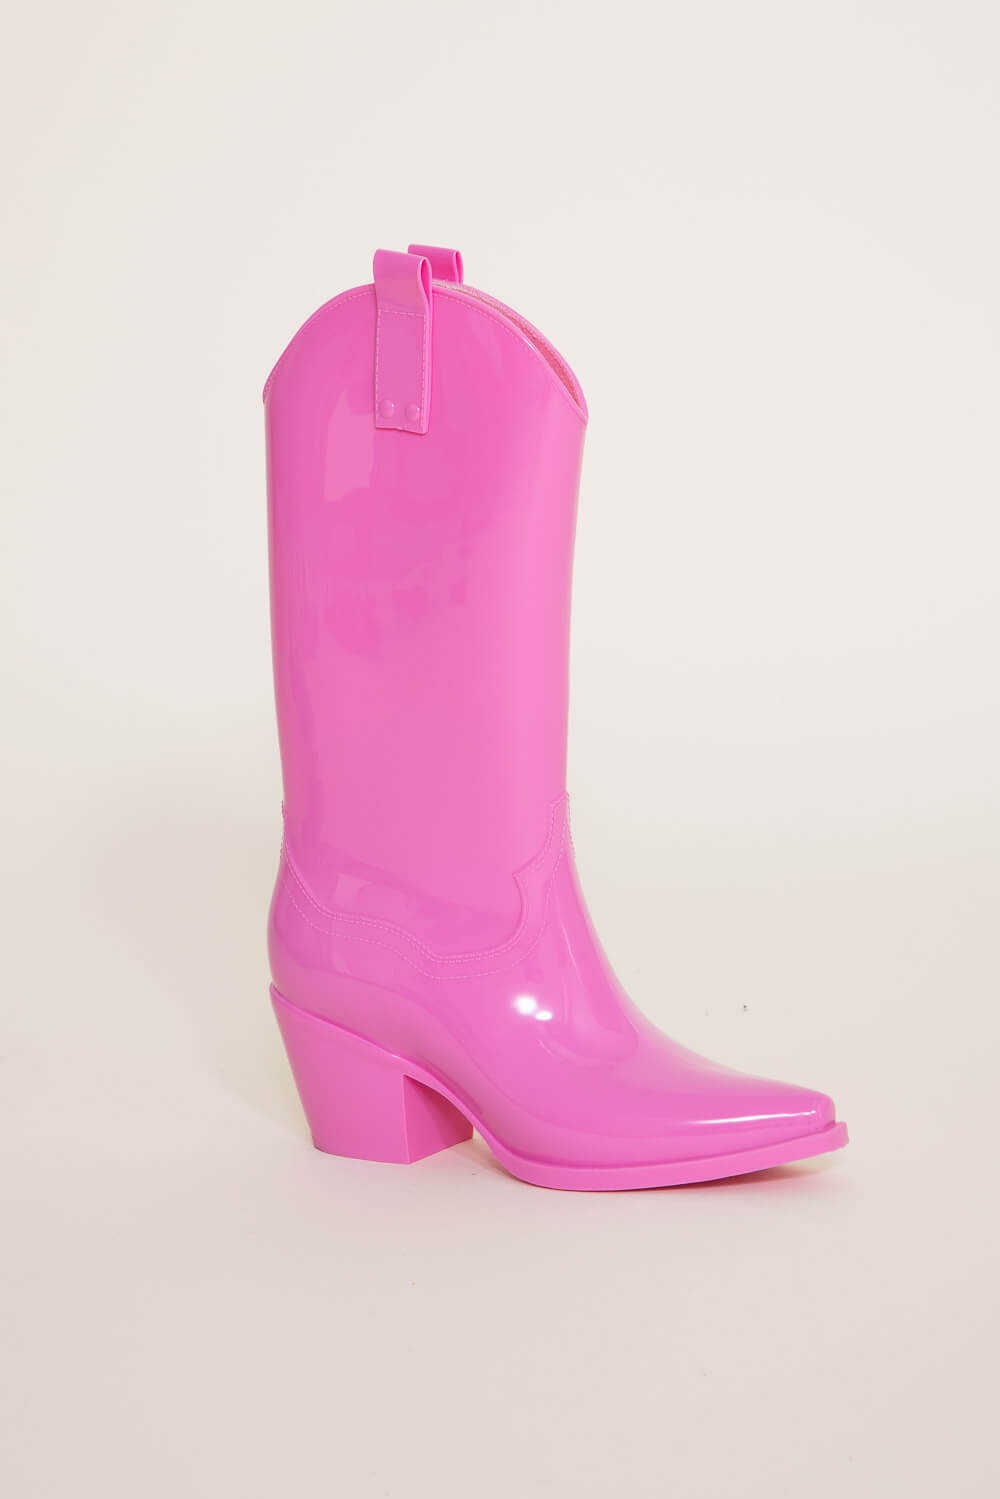  Pink Rain Boots For Women